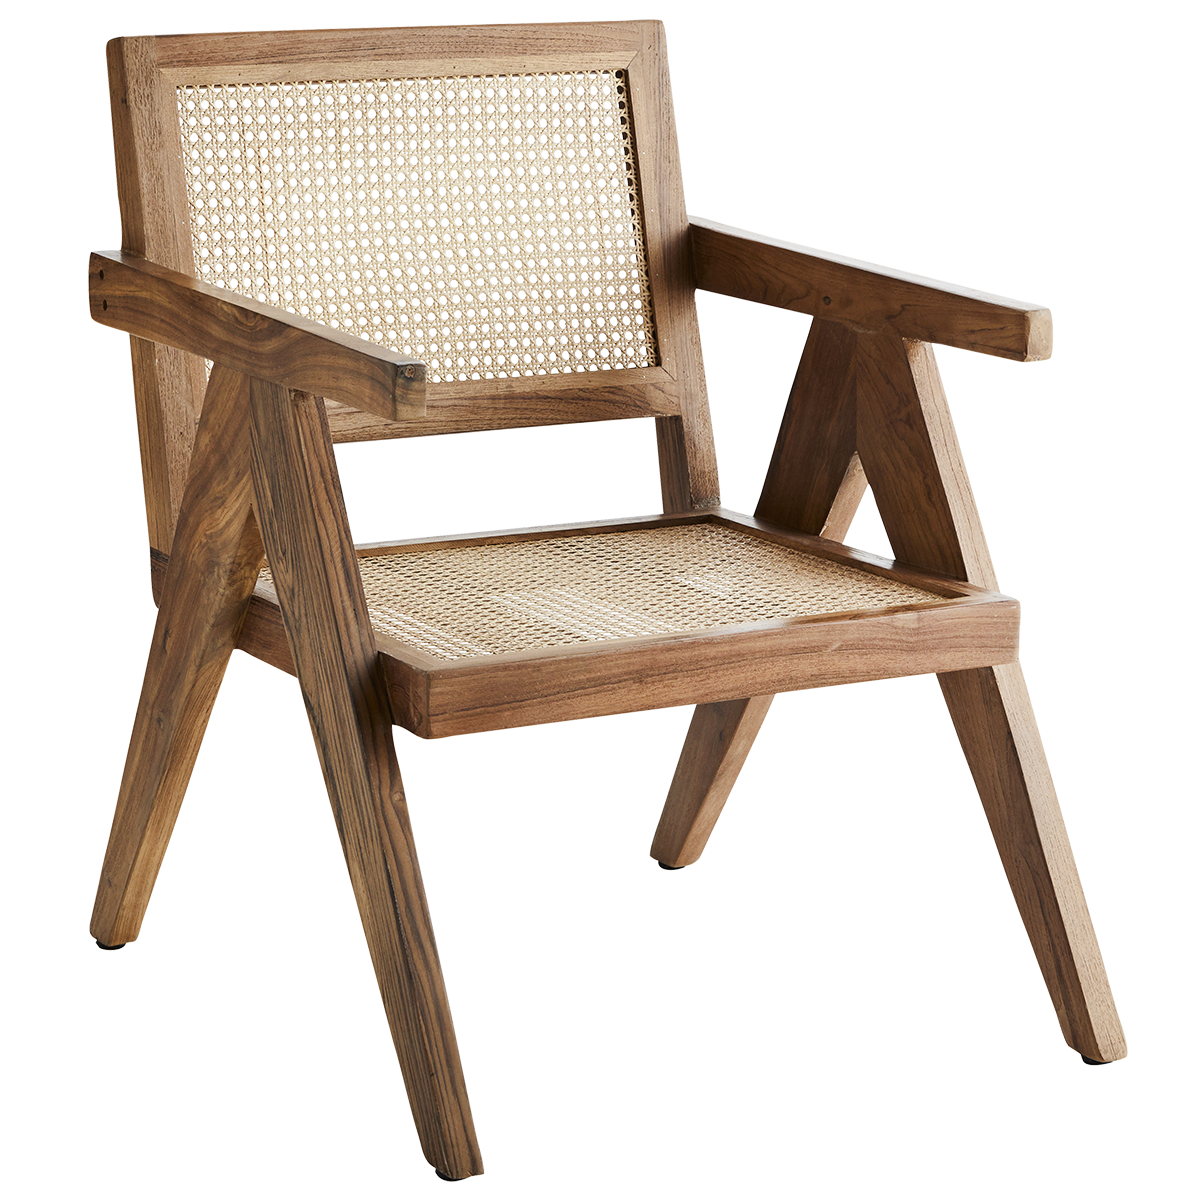 Lounge chair w/ cane